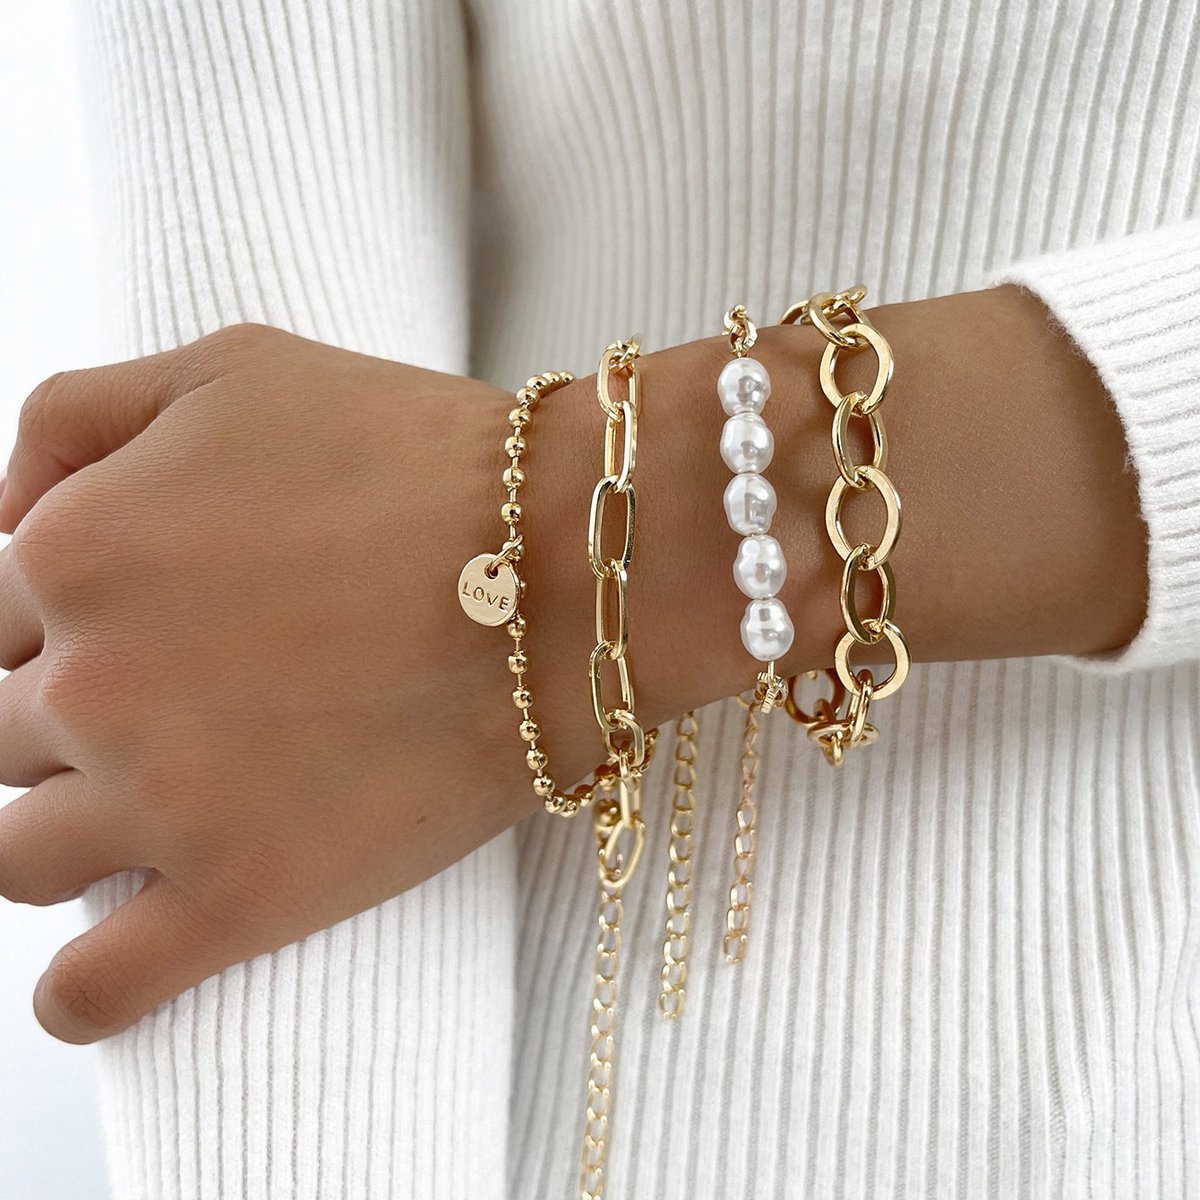 Golden Metal Detail Pearl Bracelet Set
modlily.sjv.io/EKyAnP
#bracelet #jewelry #golden #epiconetsy #etsymntt #twitterx #earlybiz